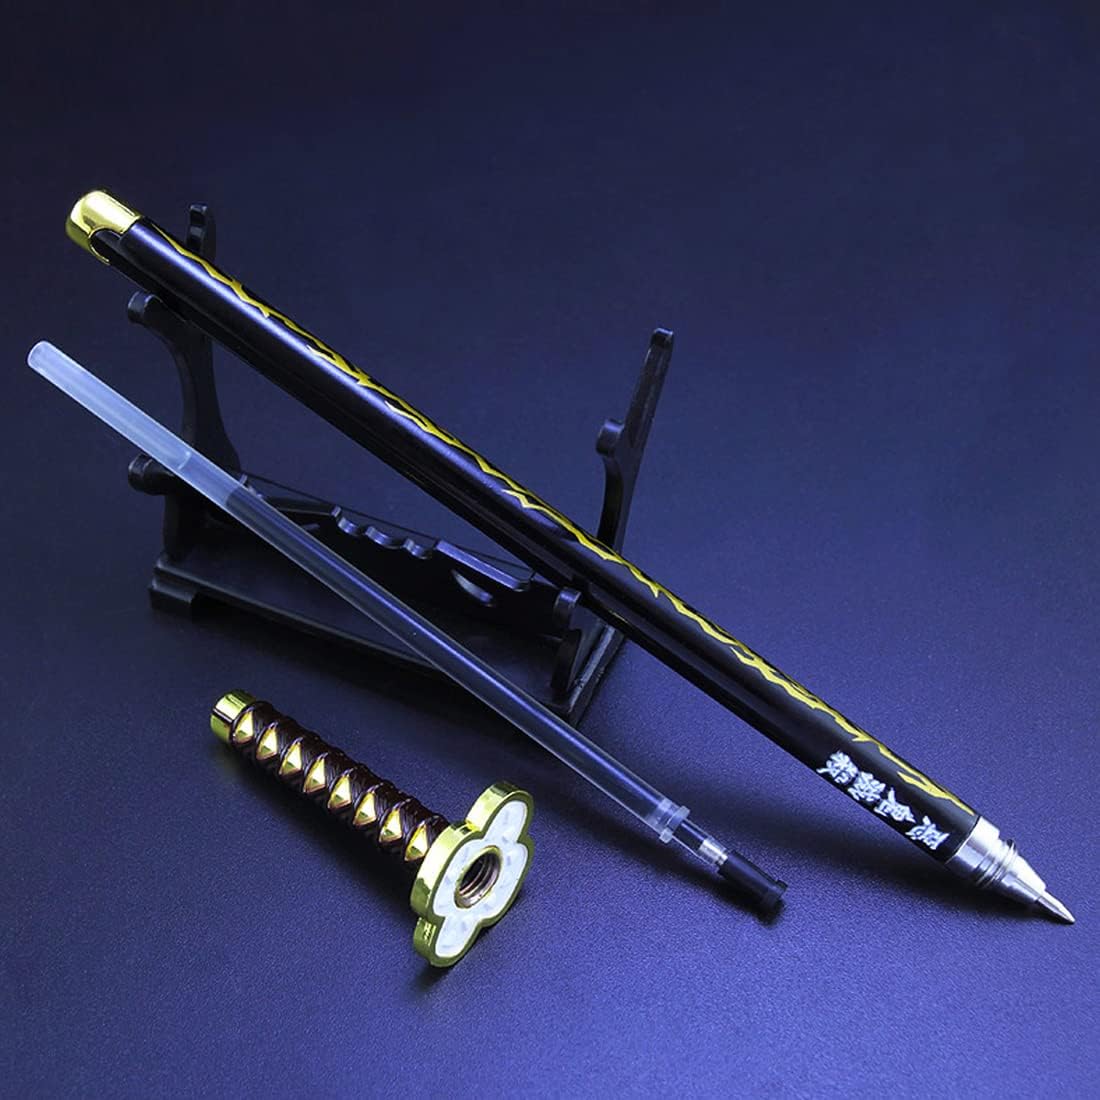 Demon Slayer Kimetsu No Yaiba Signature Pen Samurai Sword Katana Zenitsu 2nd Sword accessories قاتل الشياطين قلم كتابة بشكل سيف زينيسكو